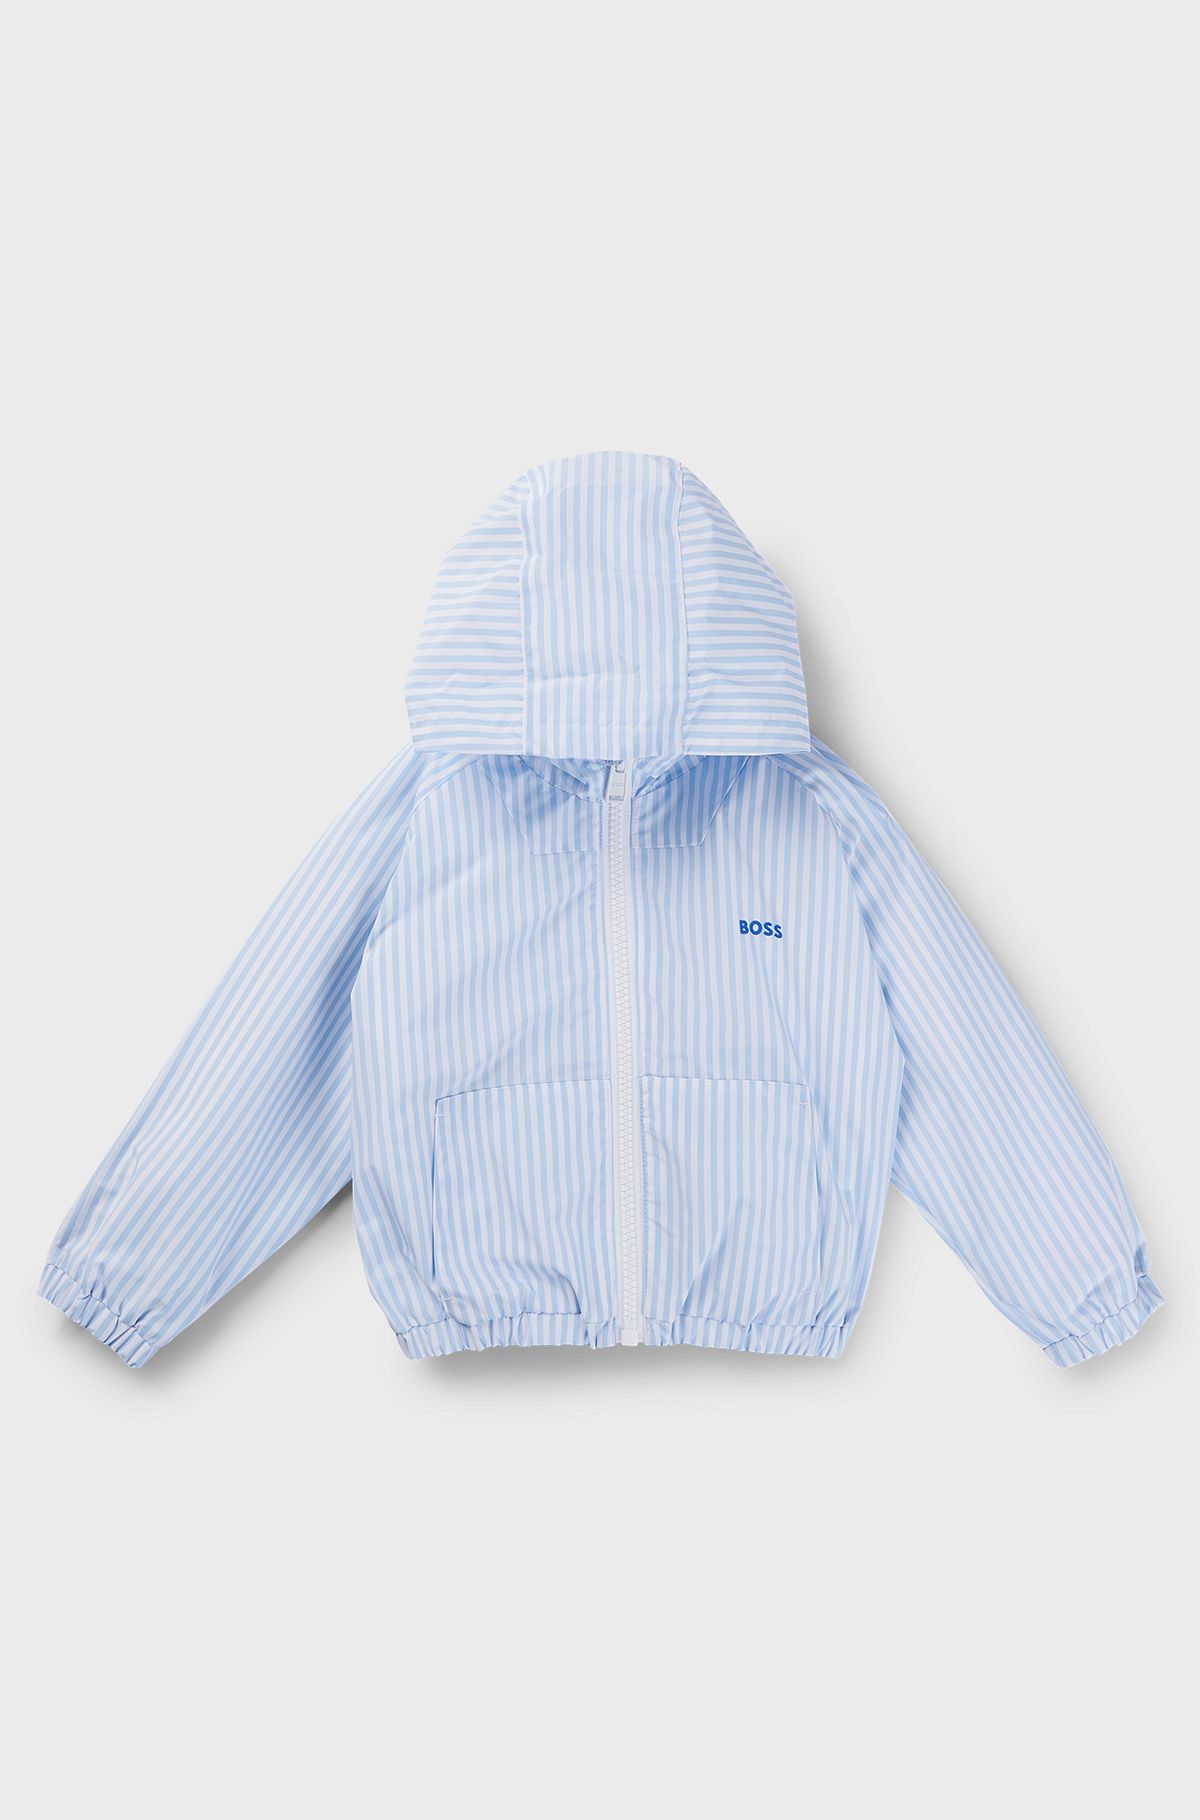 Kids' hooded rain jacket with stripes and logo print, Light Blue